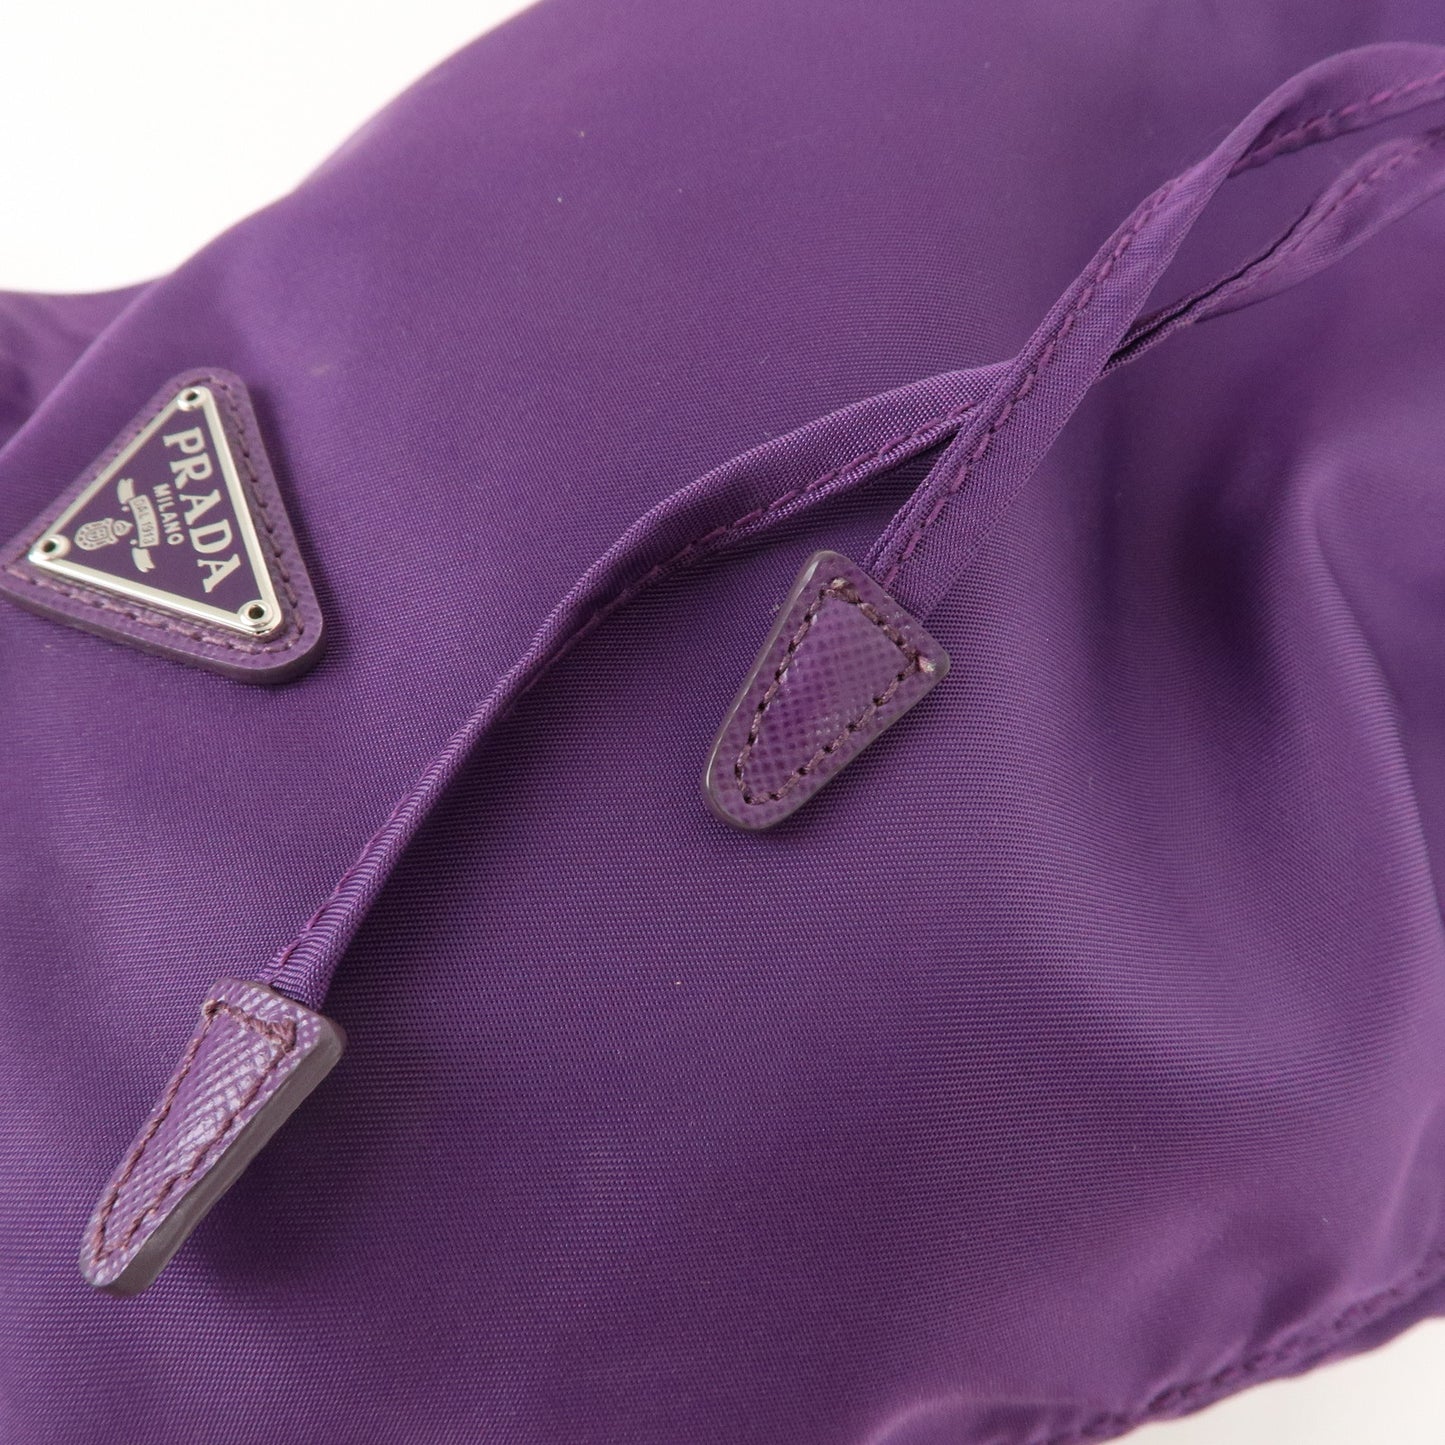 PRADA Nylon Leather Drawstring Pouch Purple 1NA369